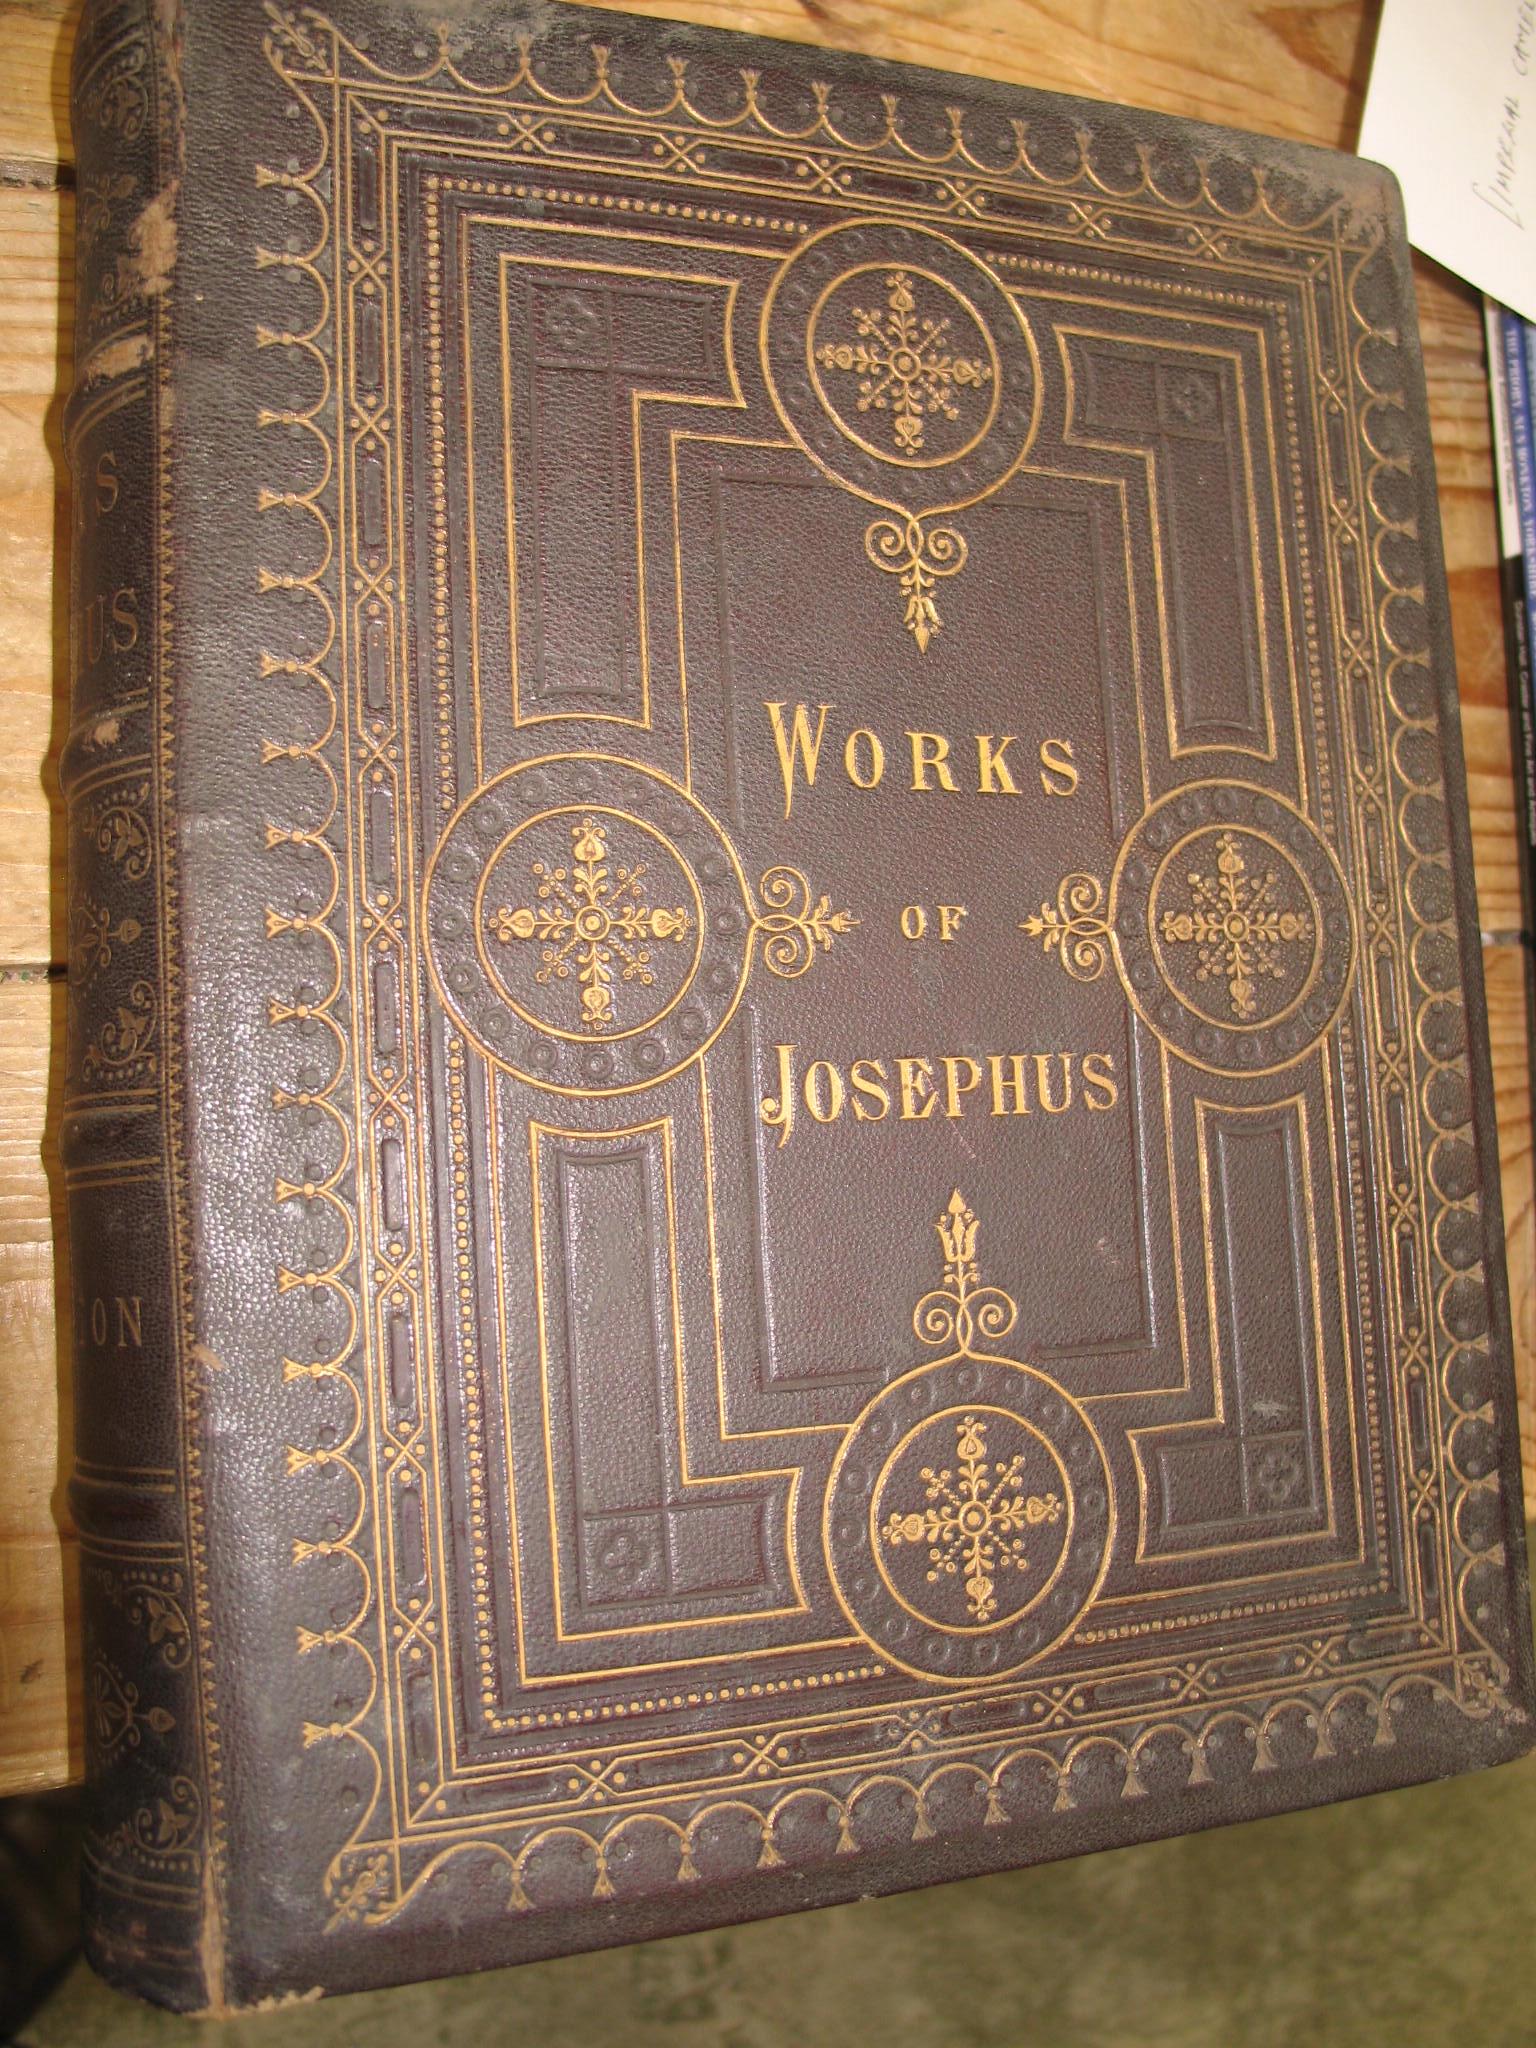 JOSEPHUS, Complete Works, stout 4to, chromo plates, decorative morocco gilt,London, n.d. ca. 1860 - Image 2 of 2